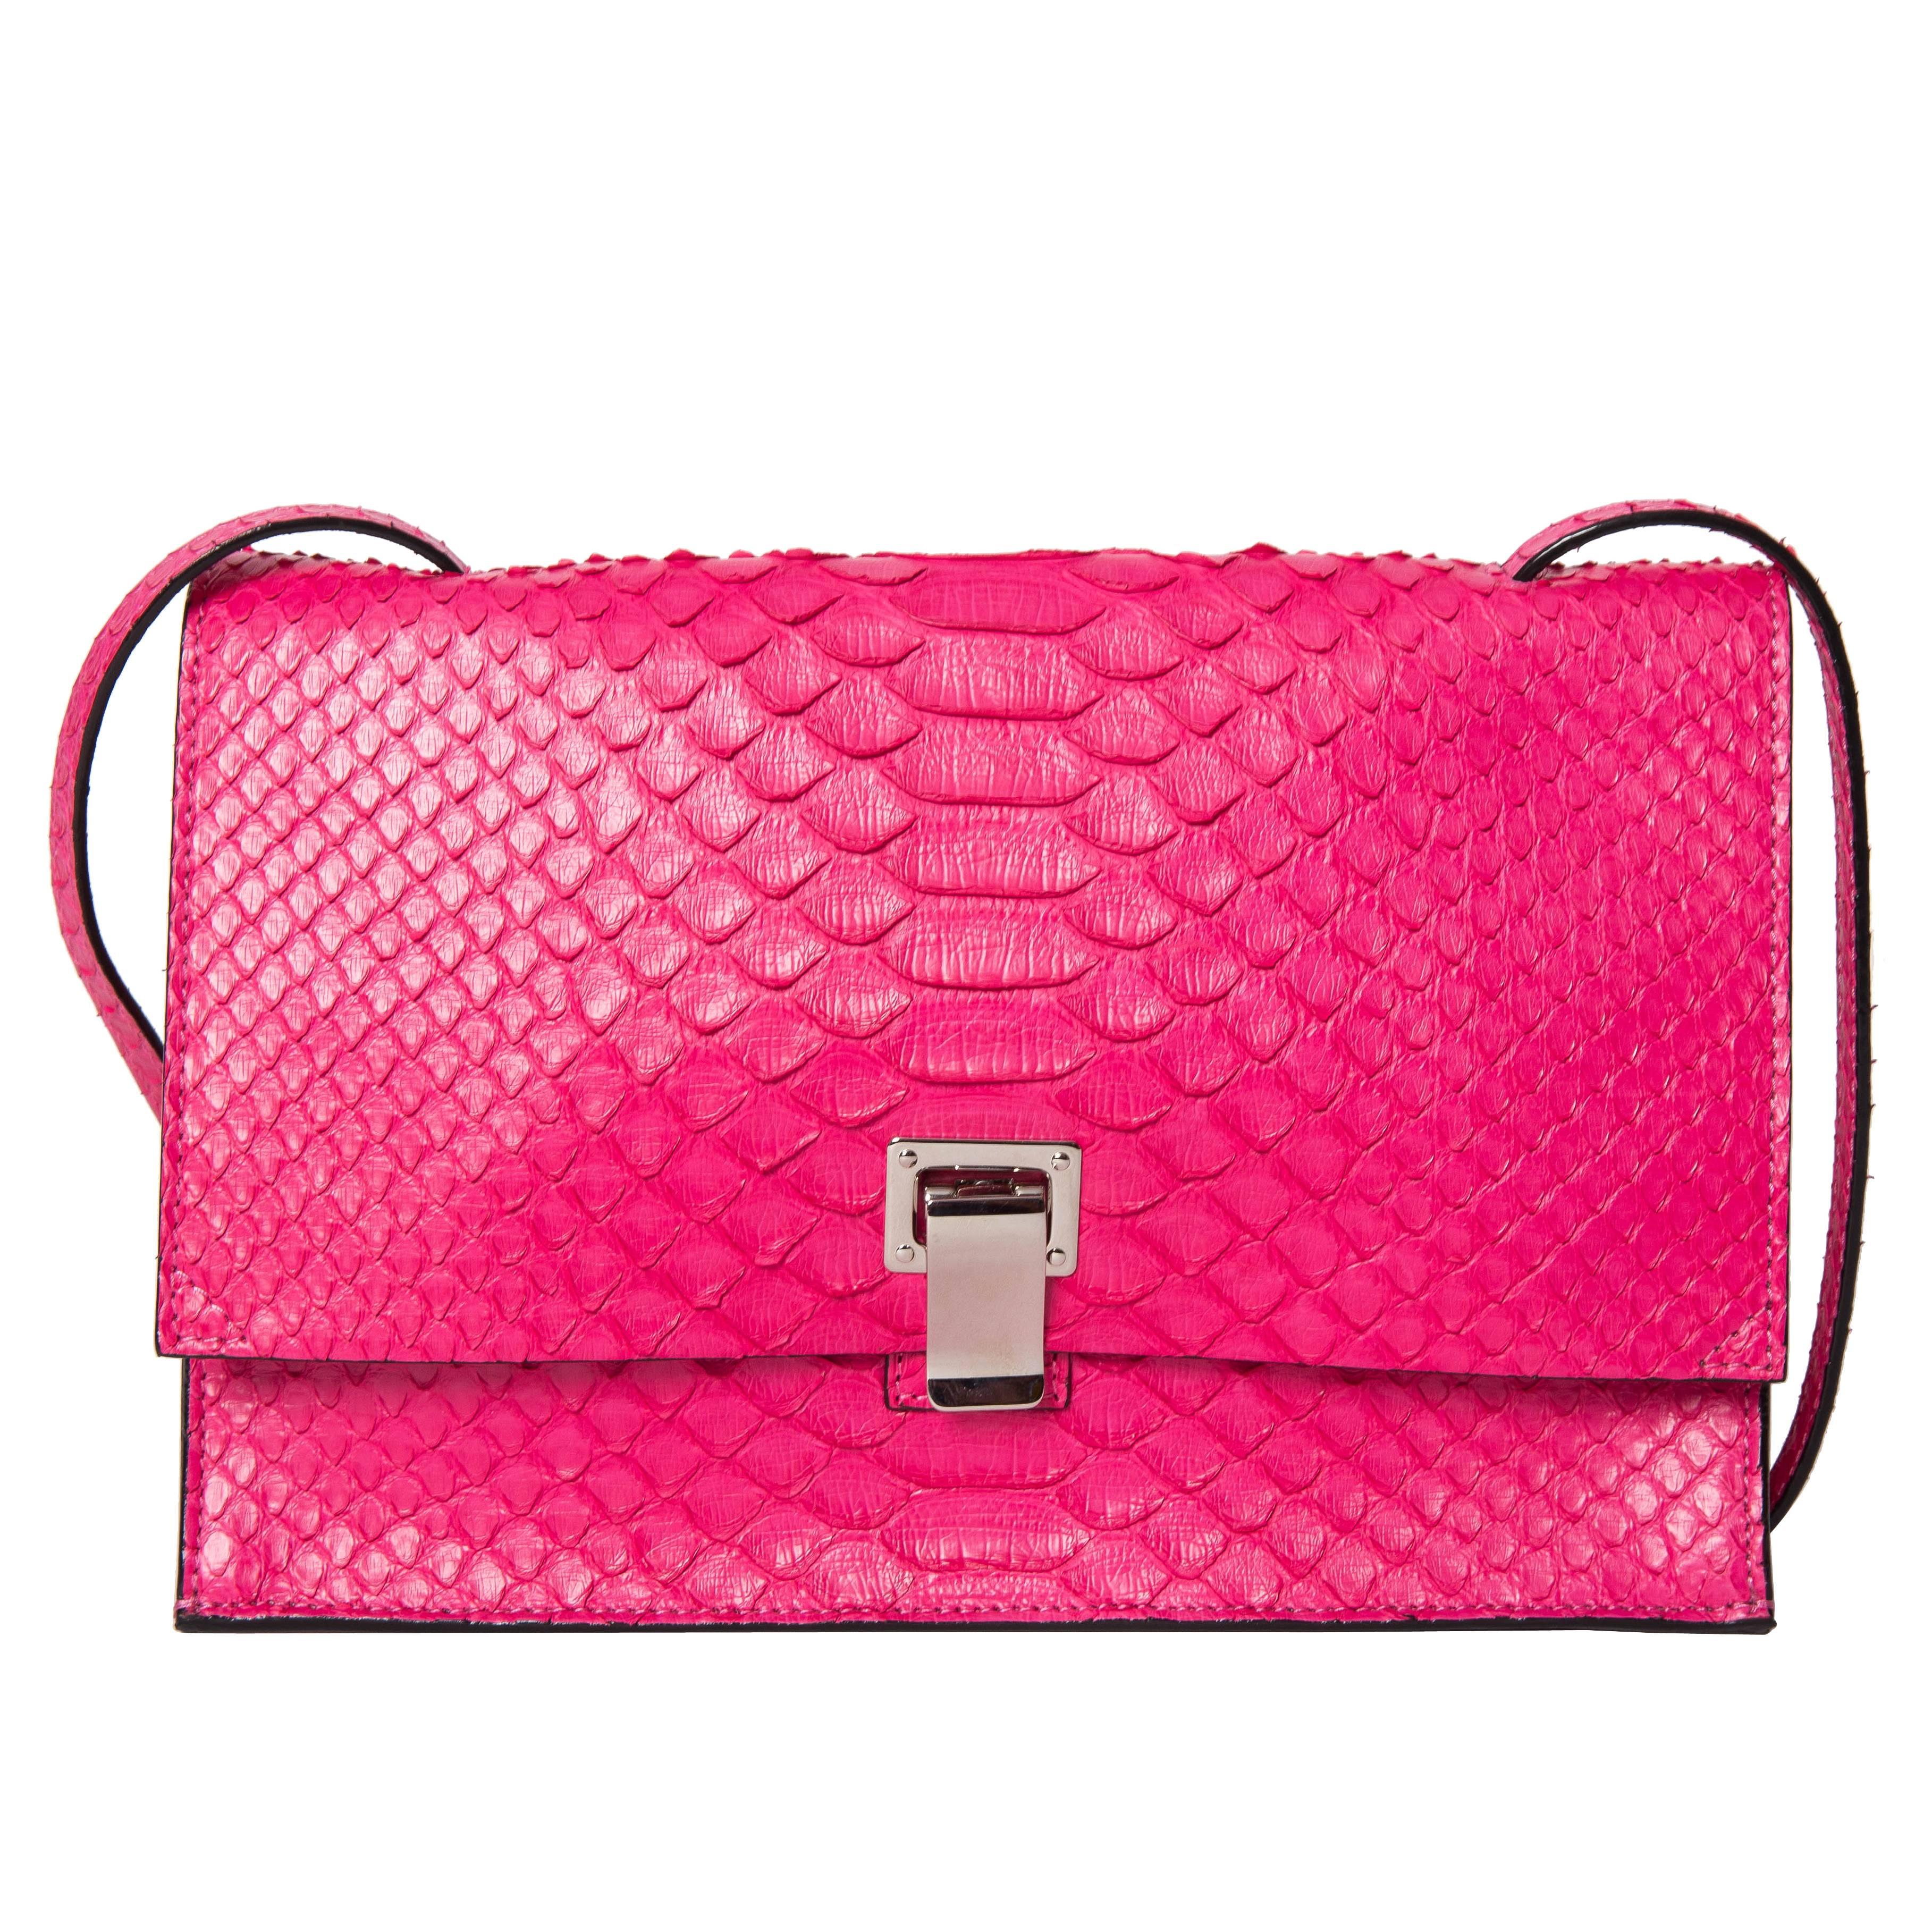 Proenza Schouler Hot Pink Python Shoulder Bag with Palladium Hardware For Sale